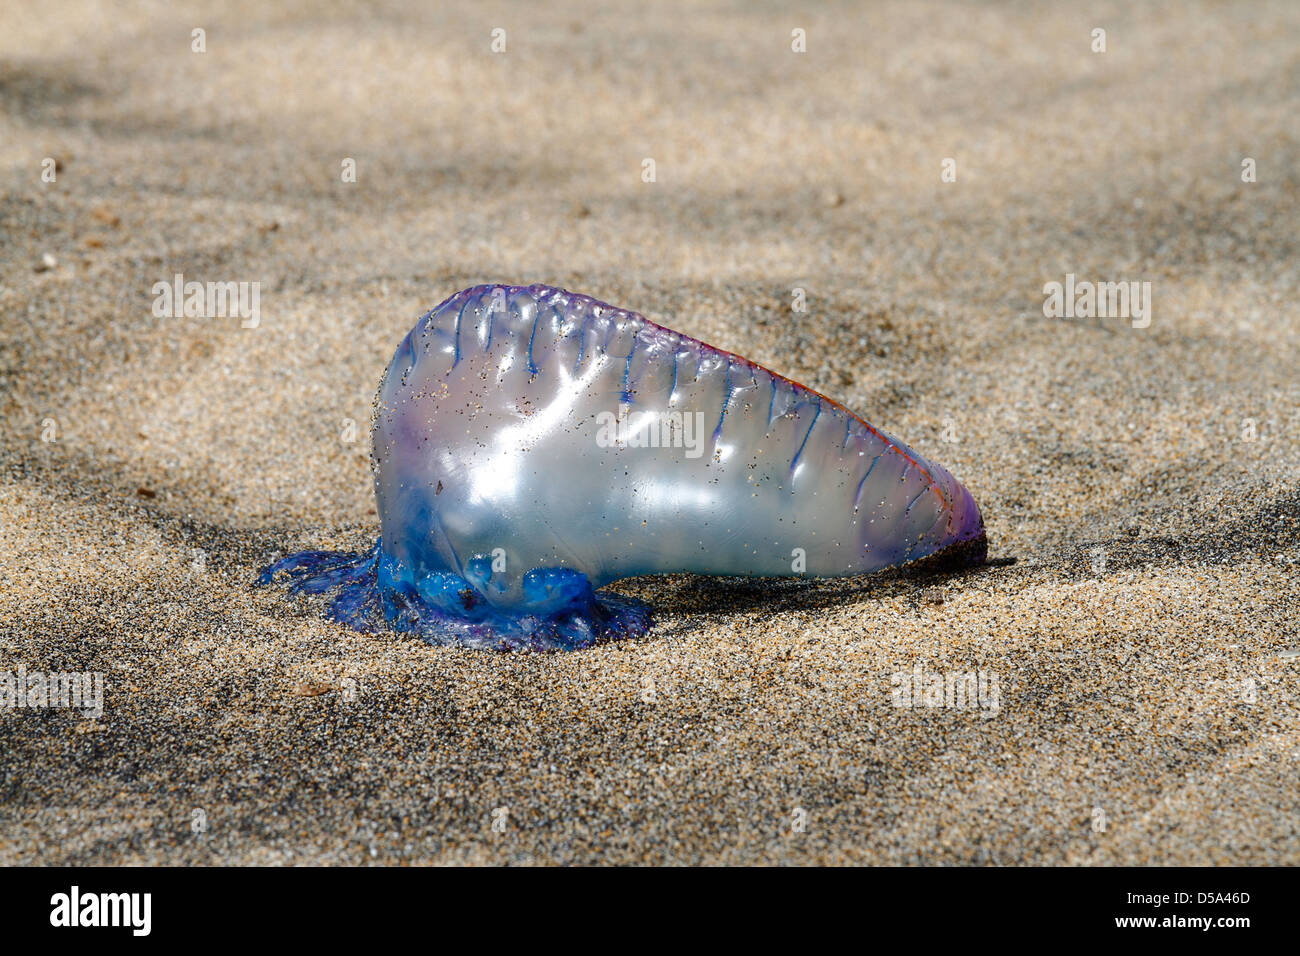 Portuguese Man O' War (Physalia physalis) or Blue Bottle on the beach Stock Photo